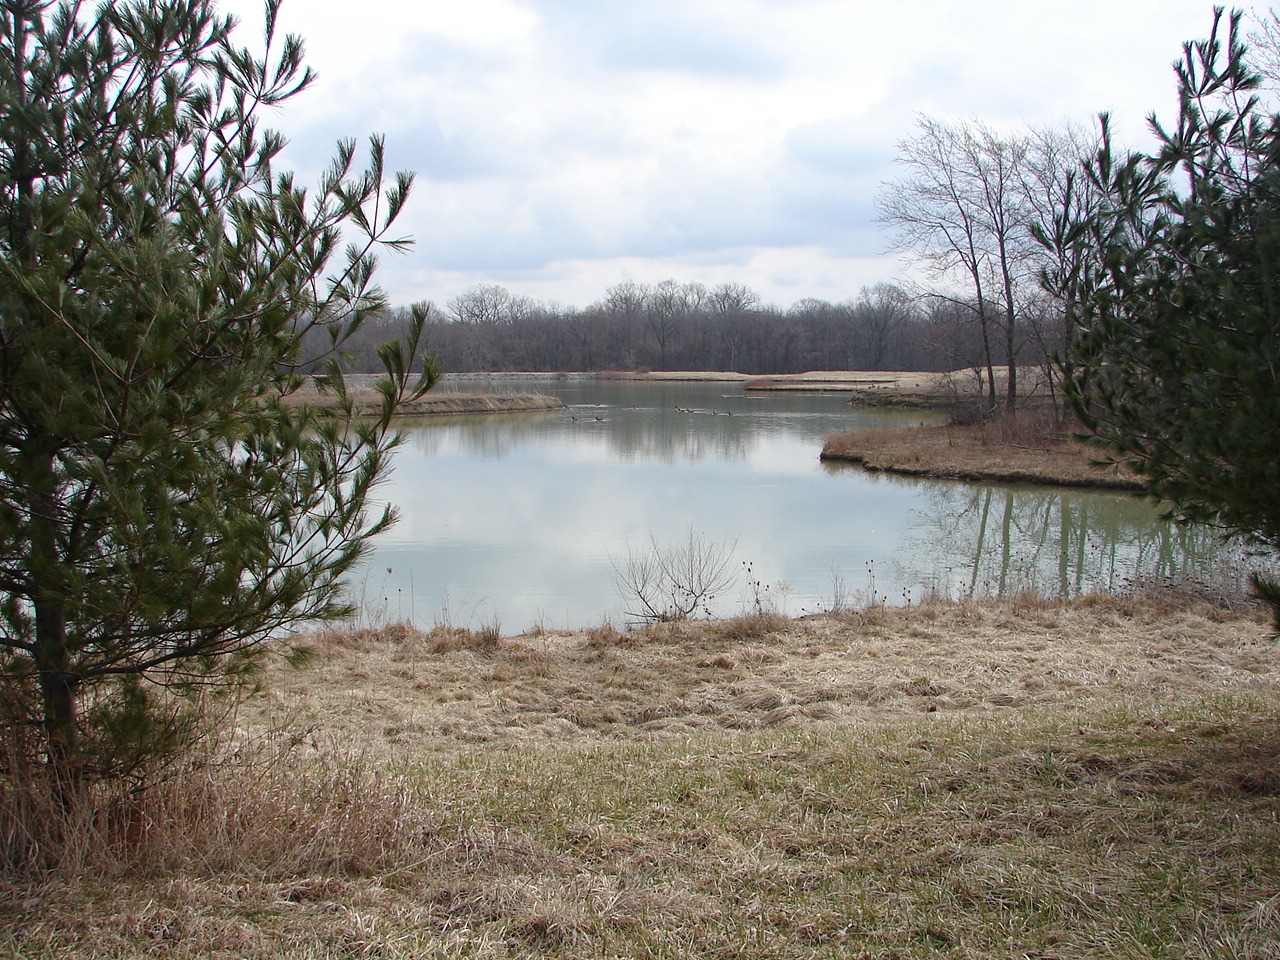 Winter season at Caley Reservation's natural pond